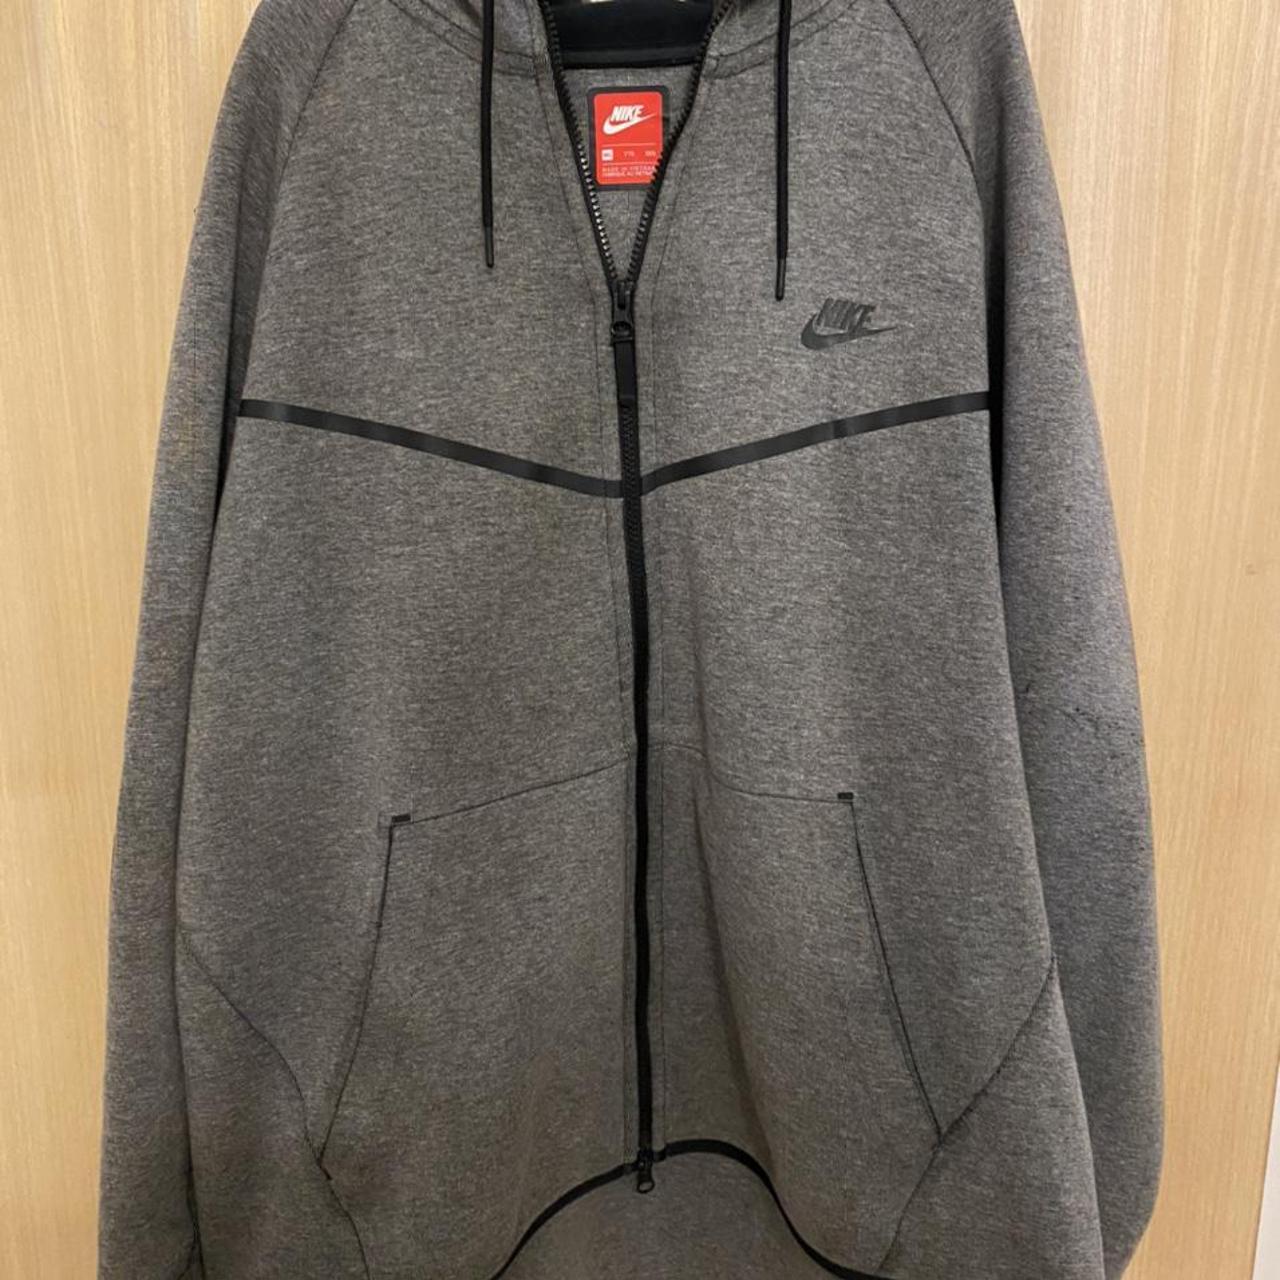 jeugd Higgins Ondergedompeld Old style Nike Tech fleece hoodie Has been worn a... - Depop